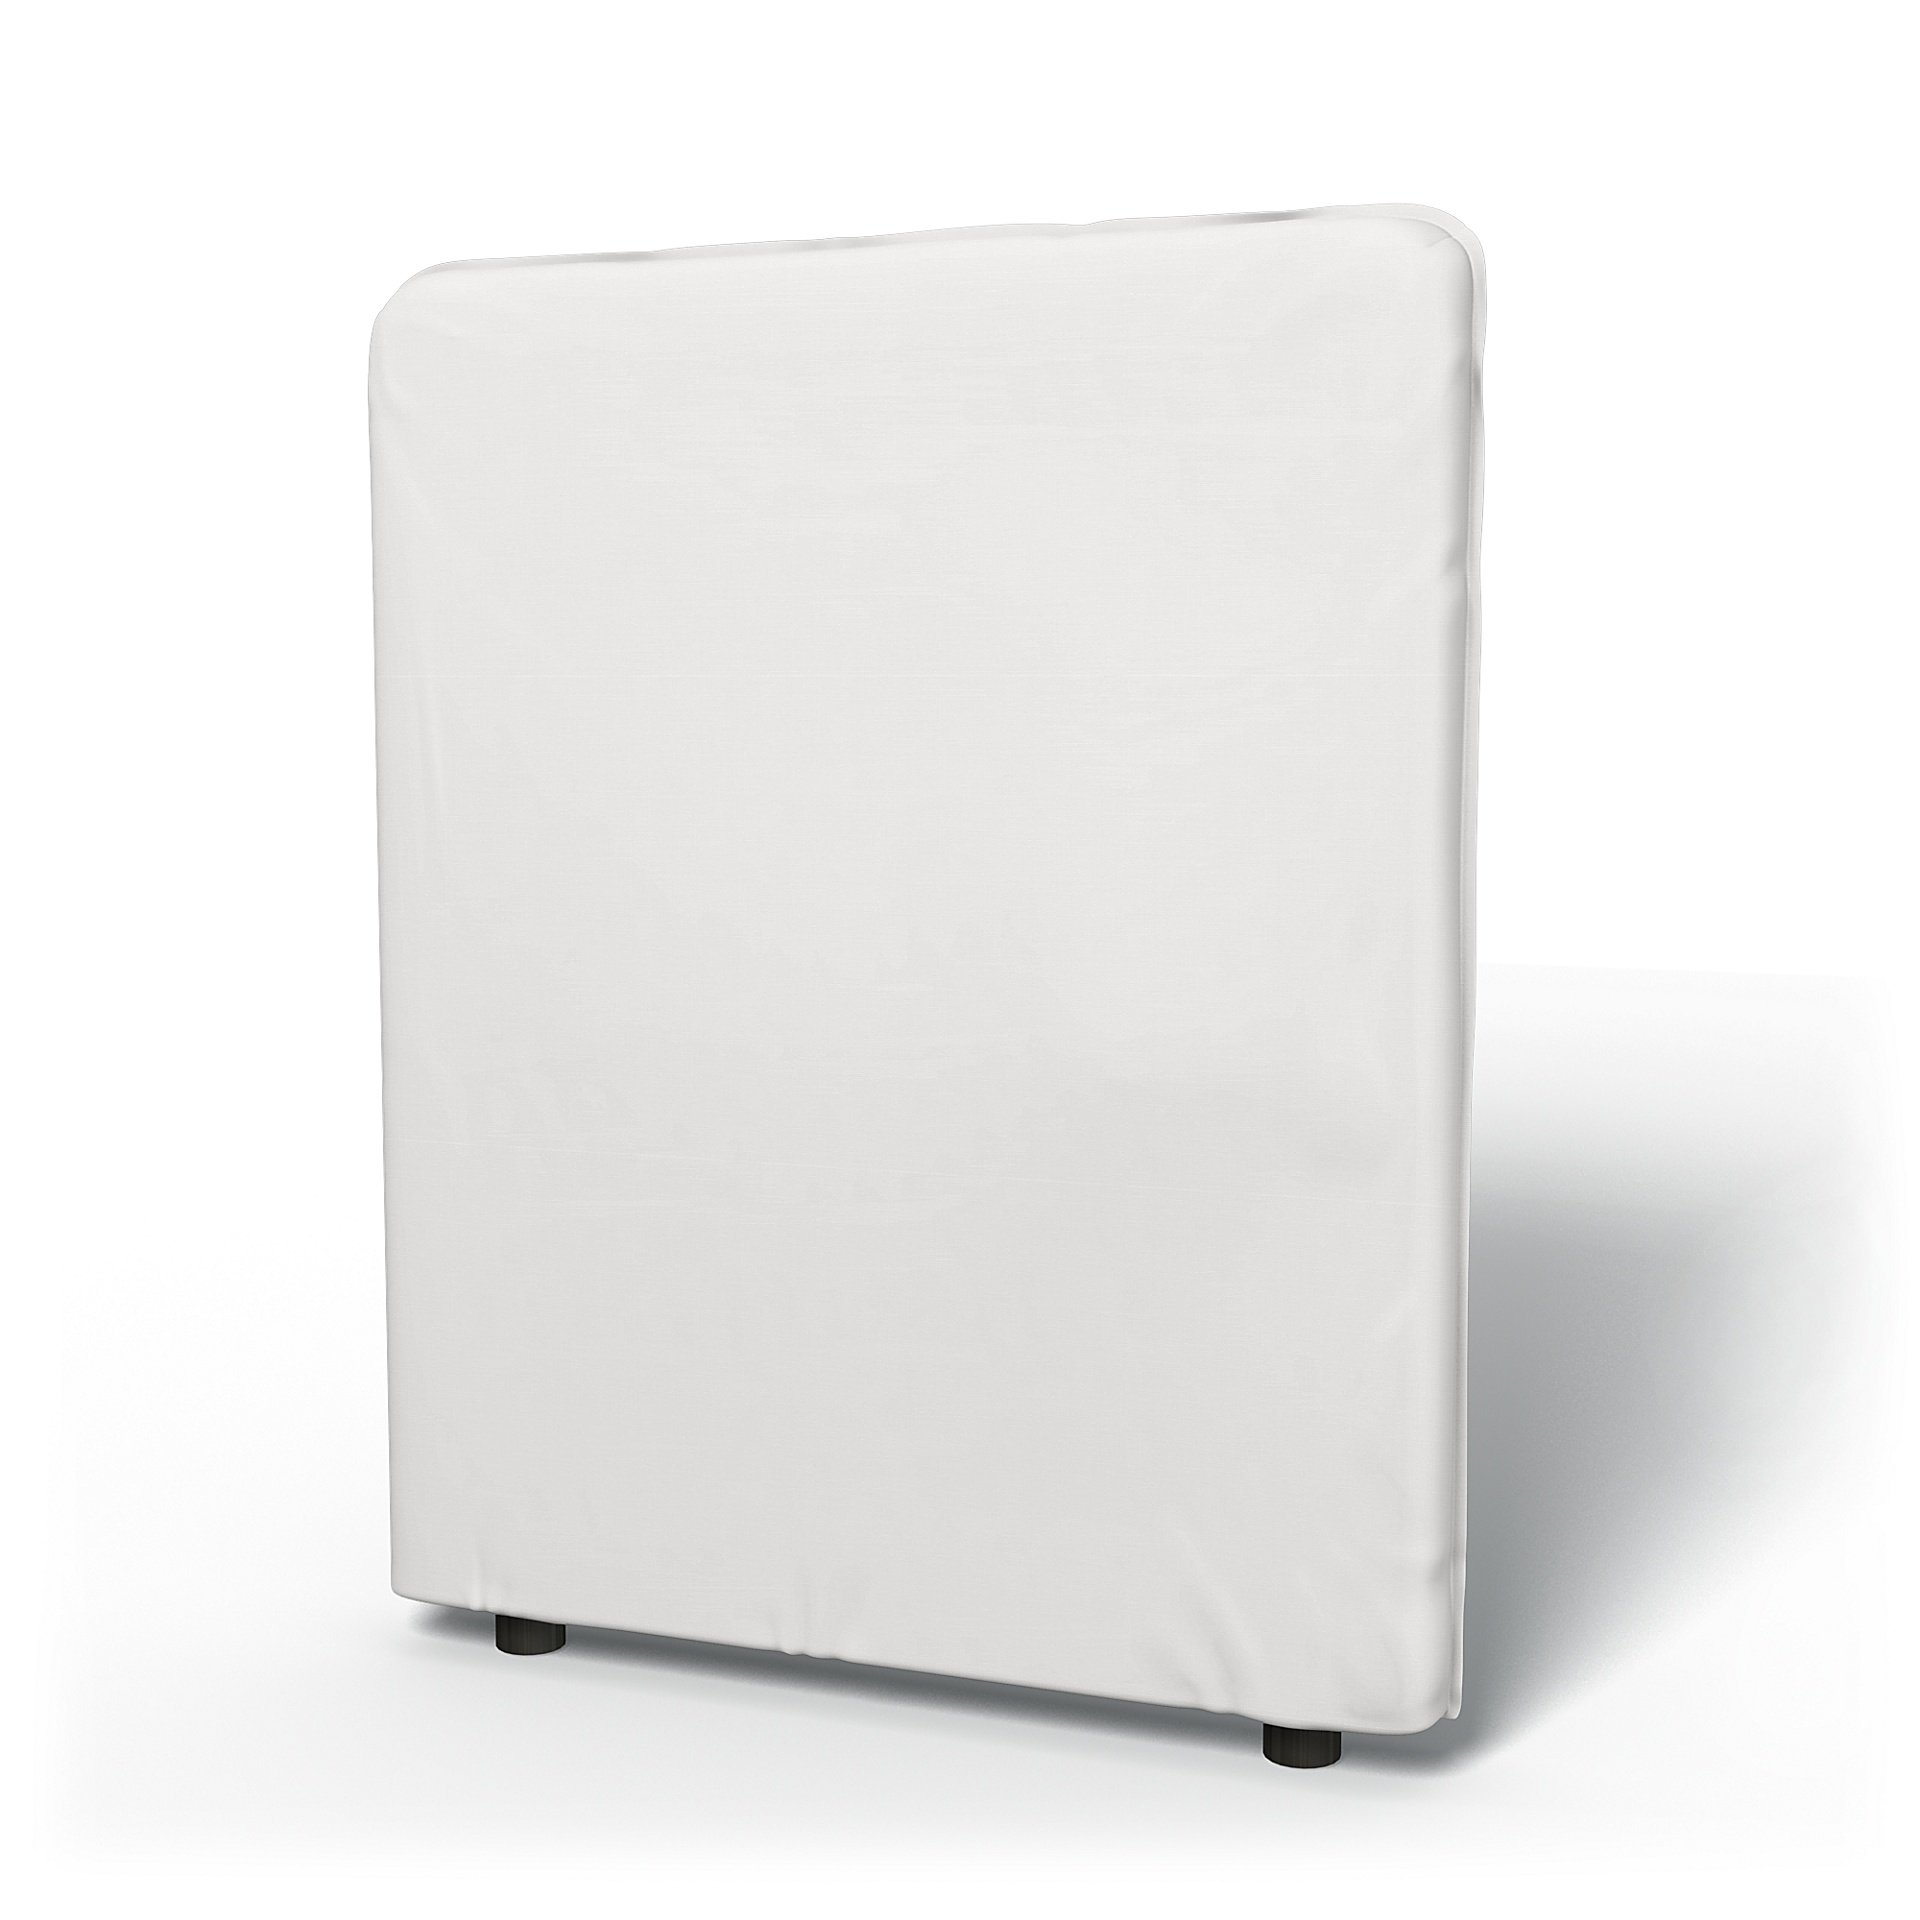 IKEA - Vallentuna High Backrest Cover 80x100cm 32x39in, Absolute White, Cotton - Bemz